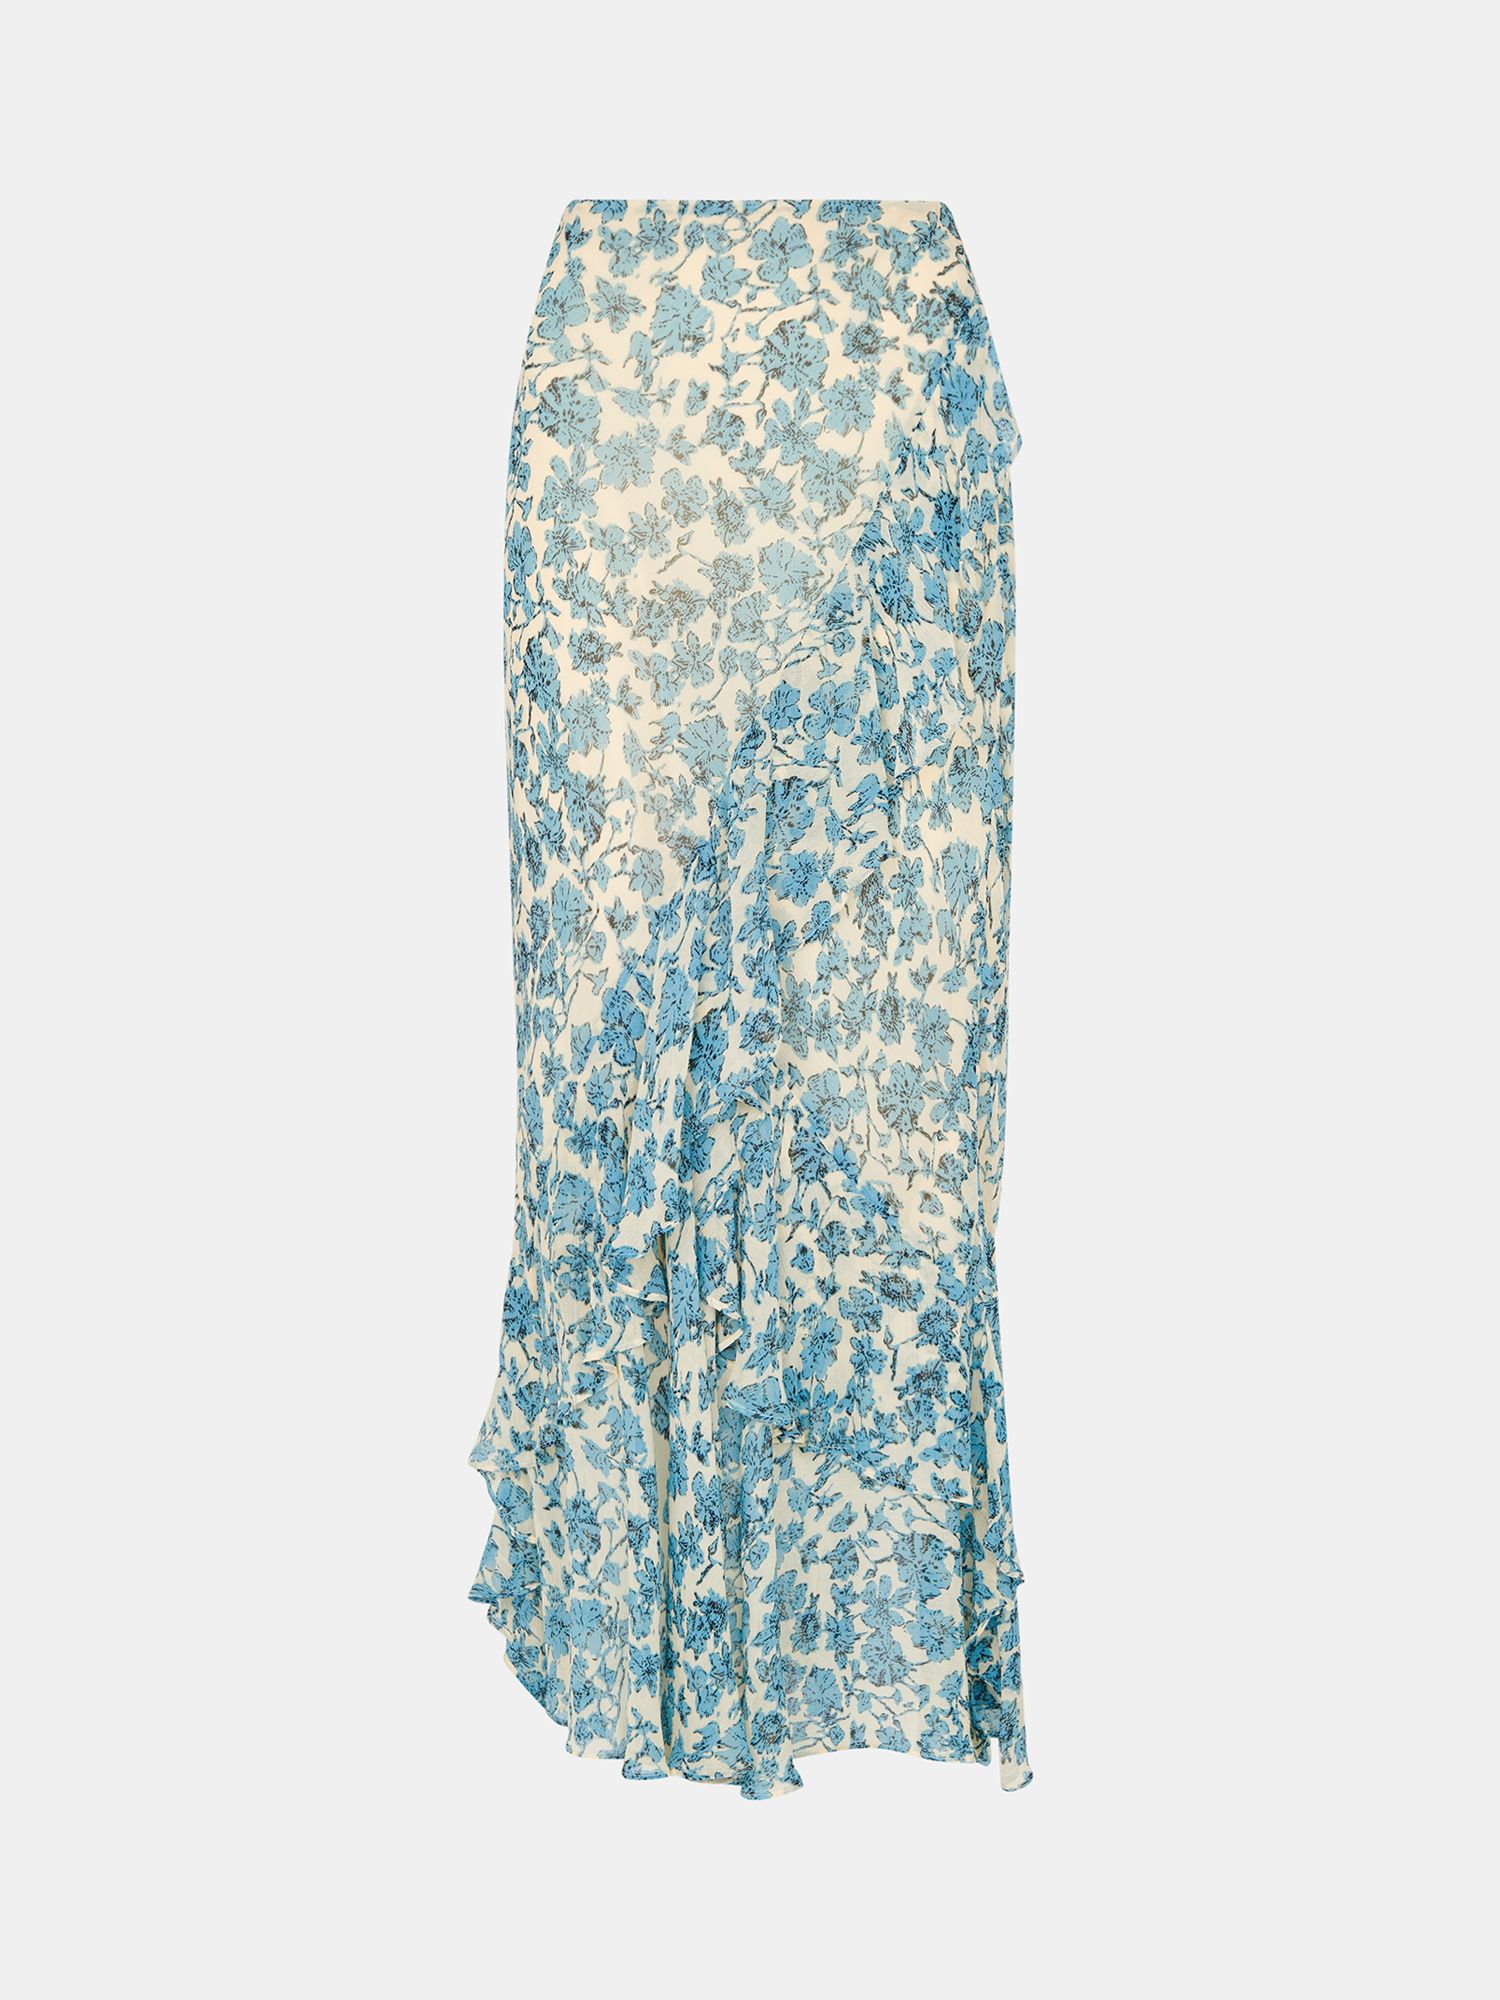 Whistles Shaded Floral Midi Skirt, Blue/Multi, 10